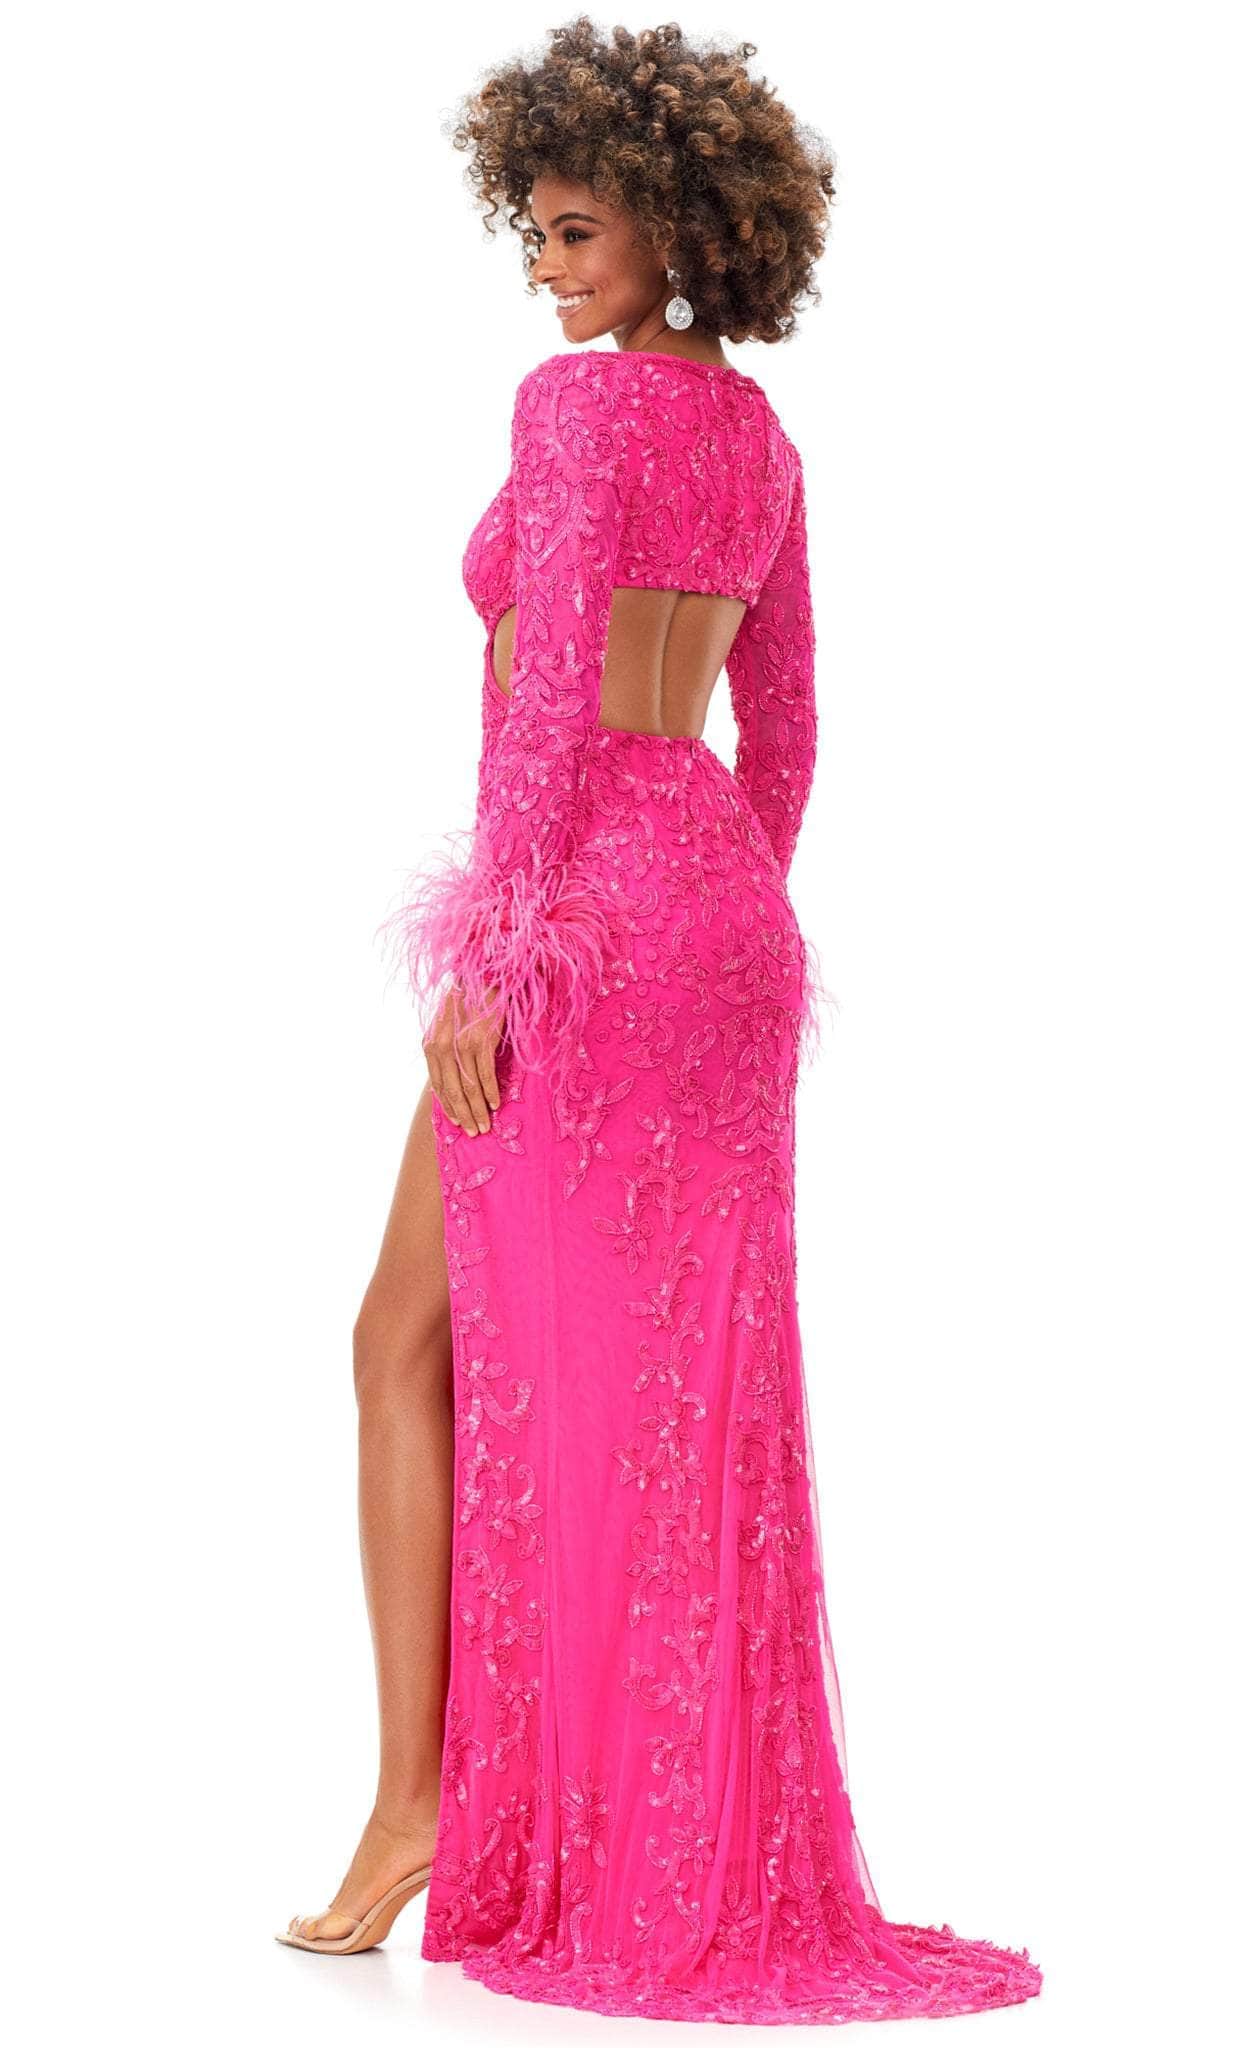 Ashley Lauren 11364 - Long Sleeve Beaded Evening Gown Evening Dresses 8 /Hot Pink